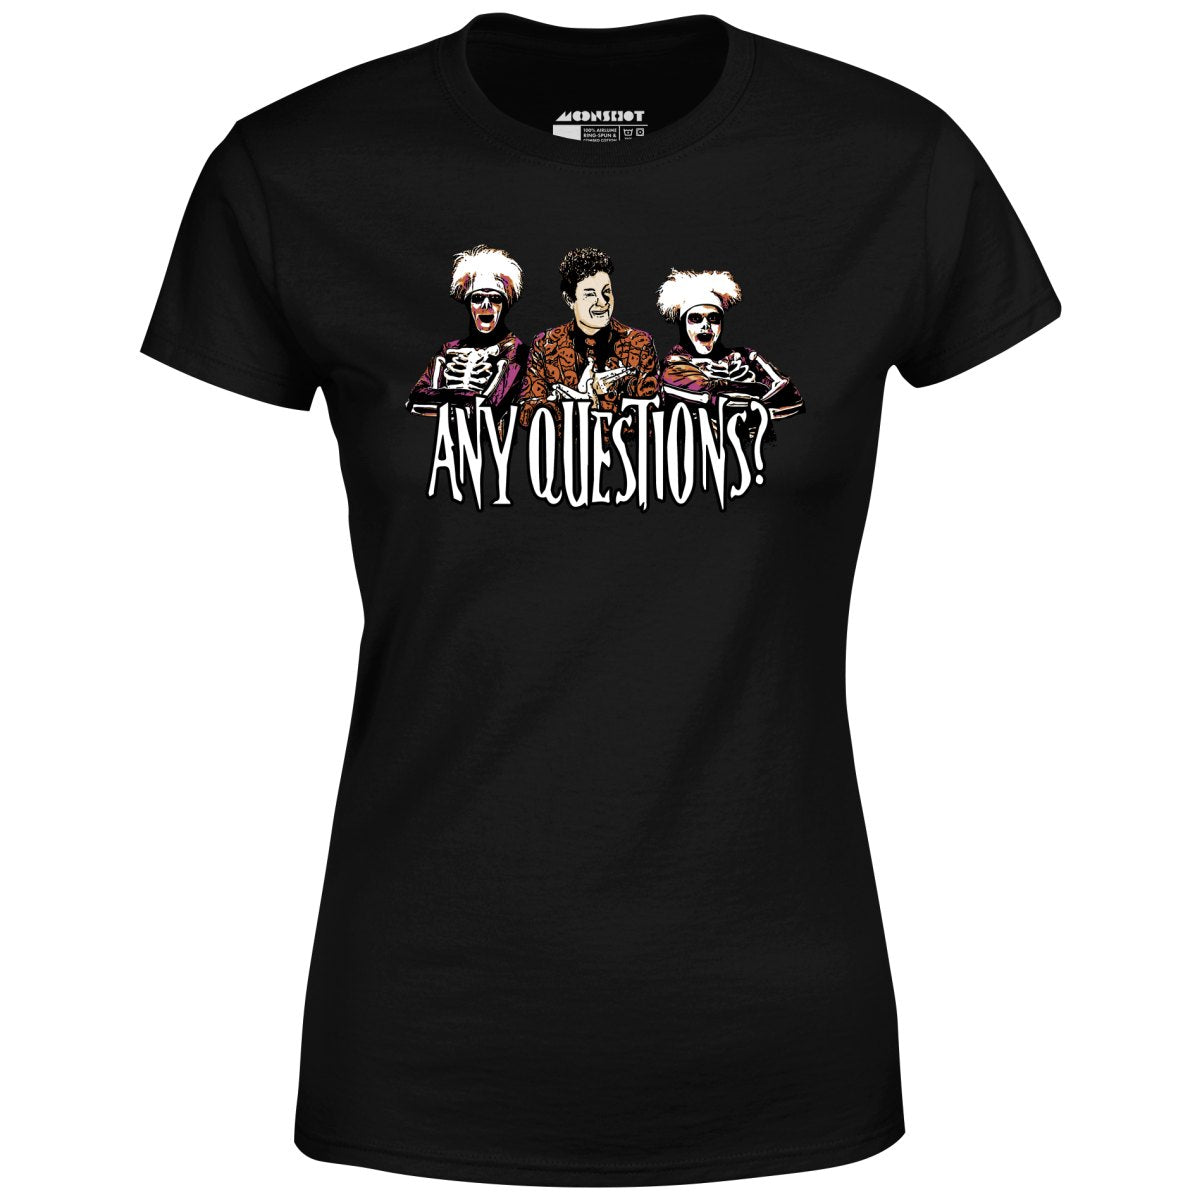 David S. Pumpkins - Any Questions? - Women's T-Shirt